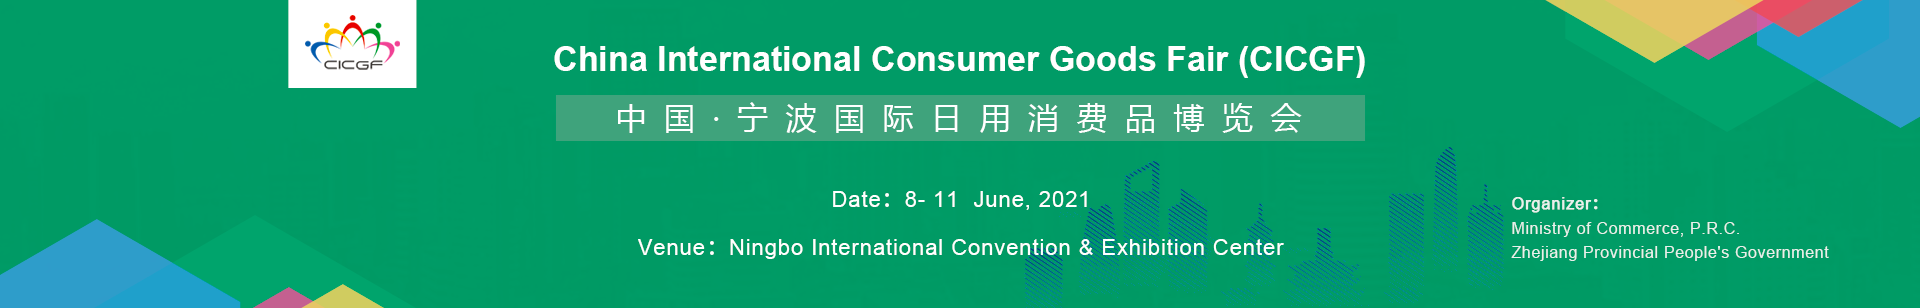 China International Consumer Goods Fair (CICGF)